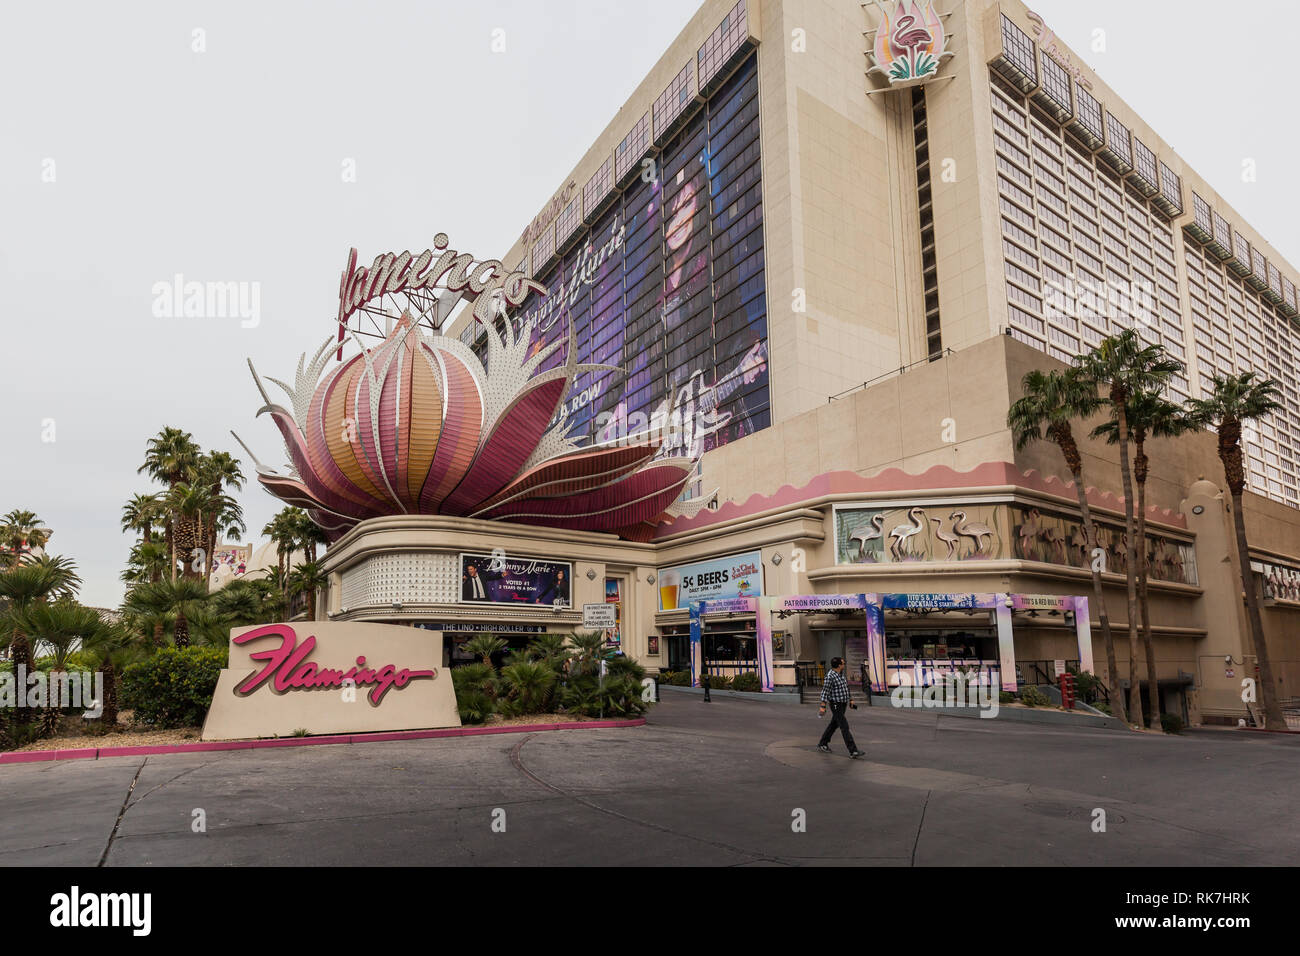 Las Vegas Casino - Flamingo Las Vegas Hotel & Casino